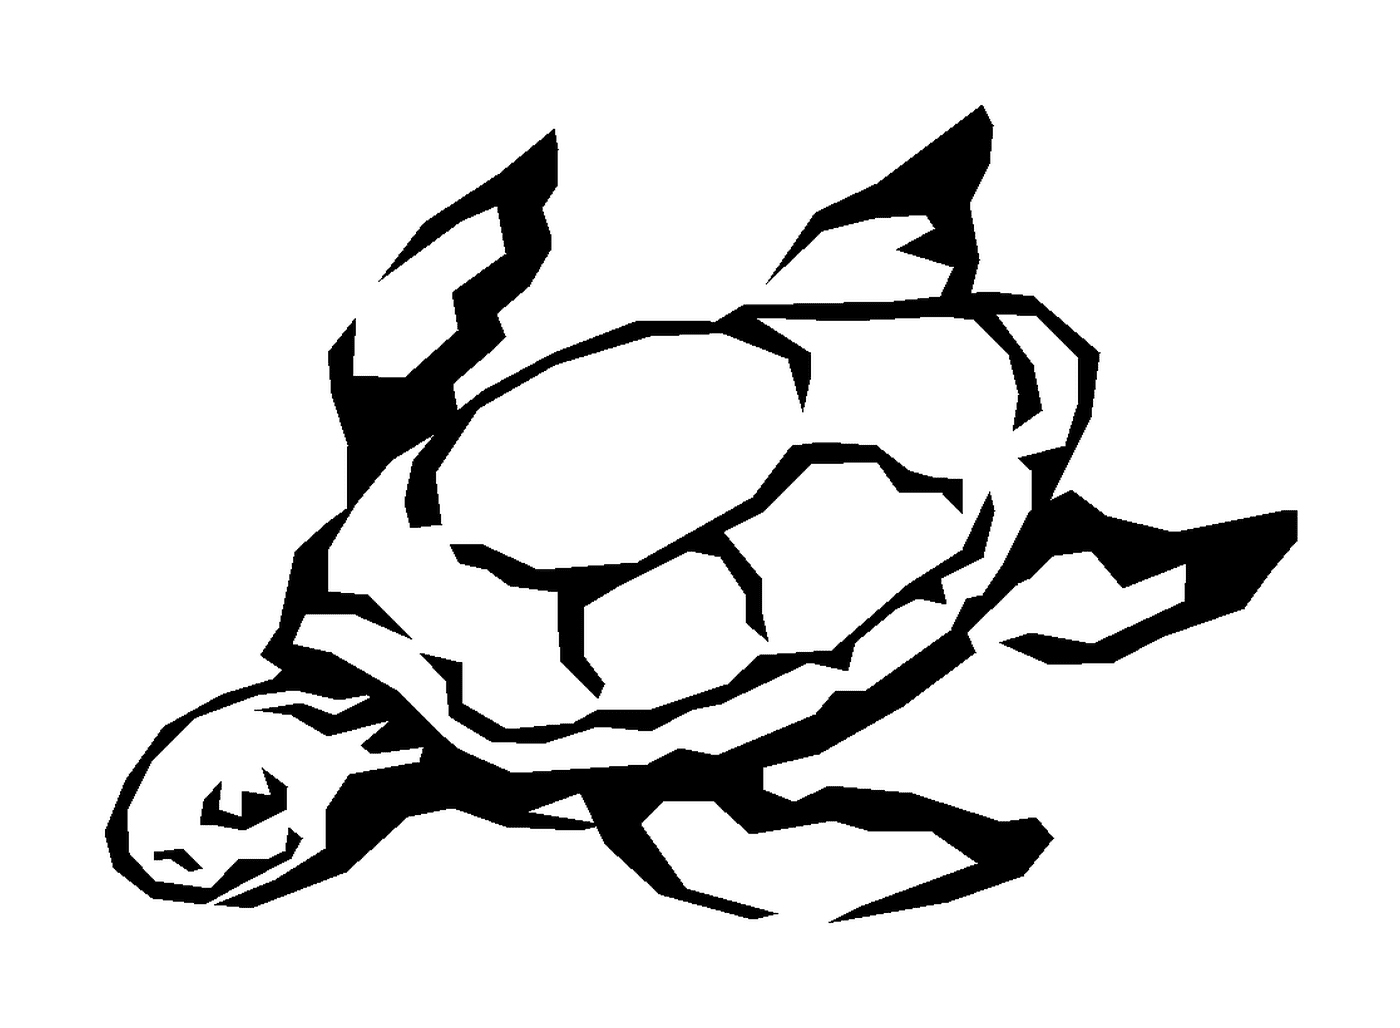  Tartaruga marina 2 